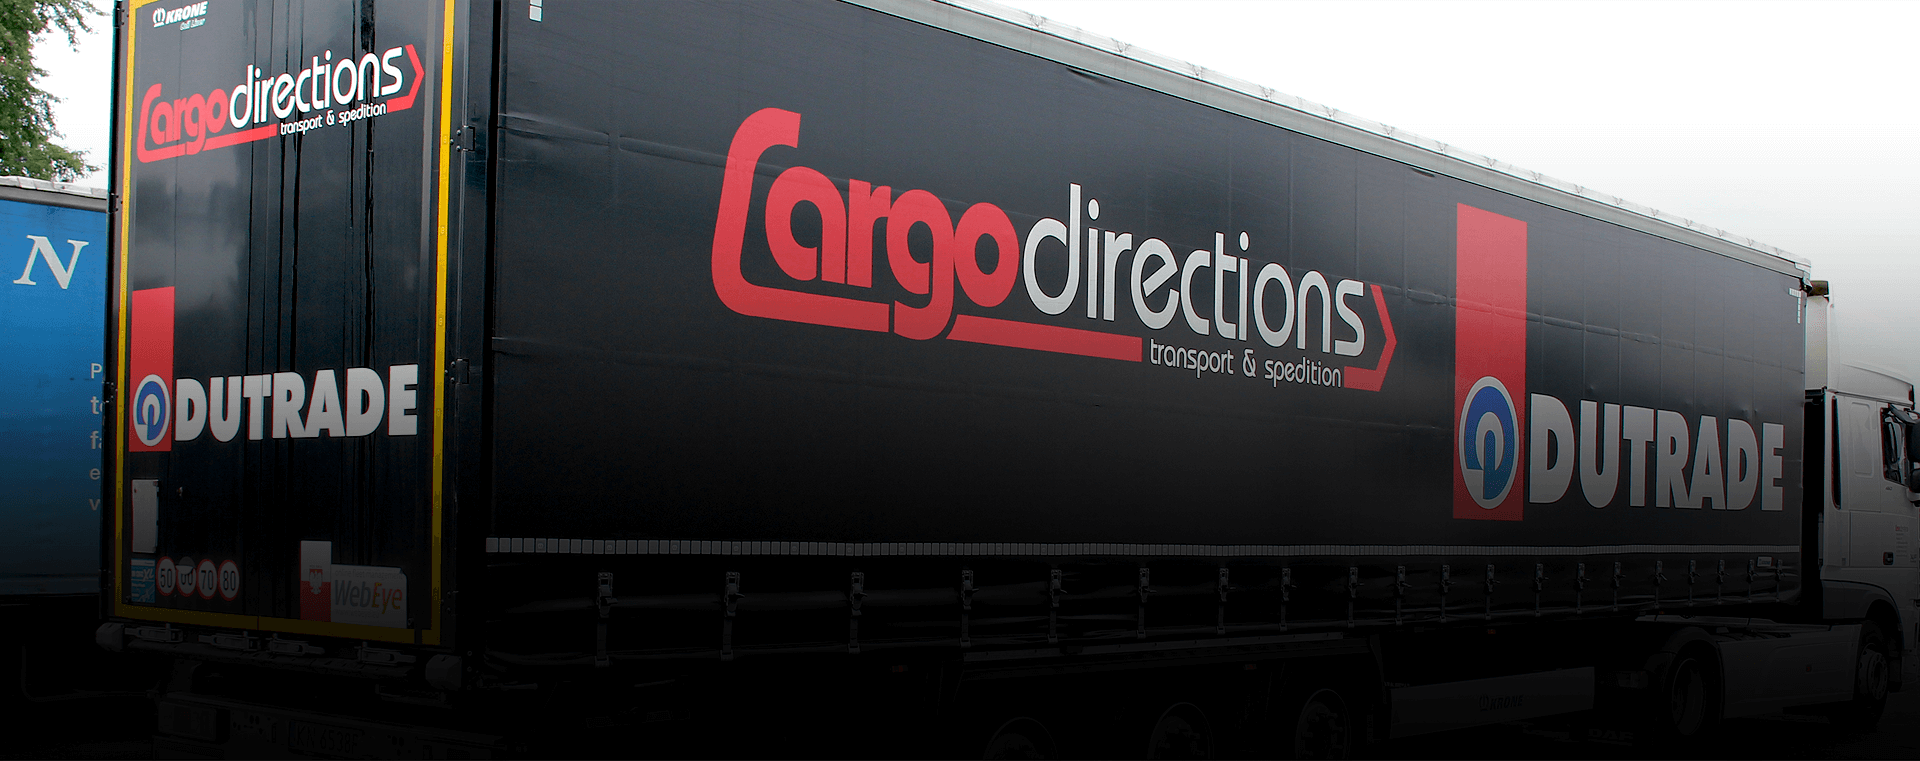 Cargo Directions